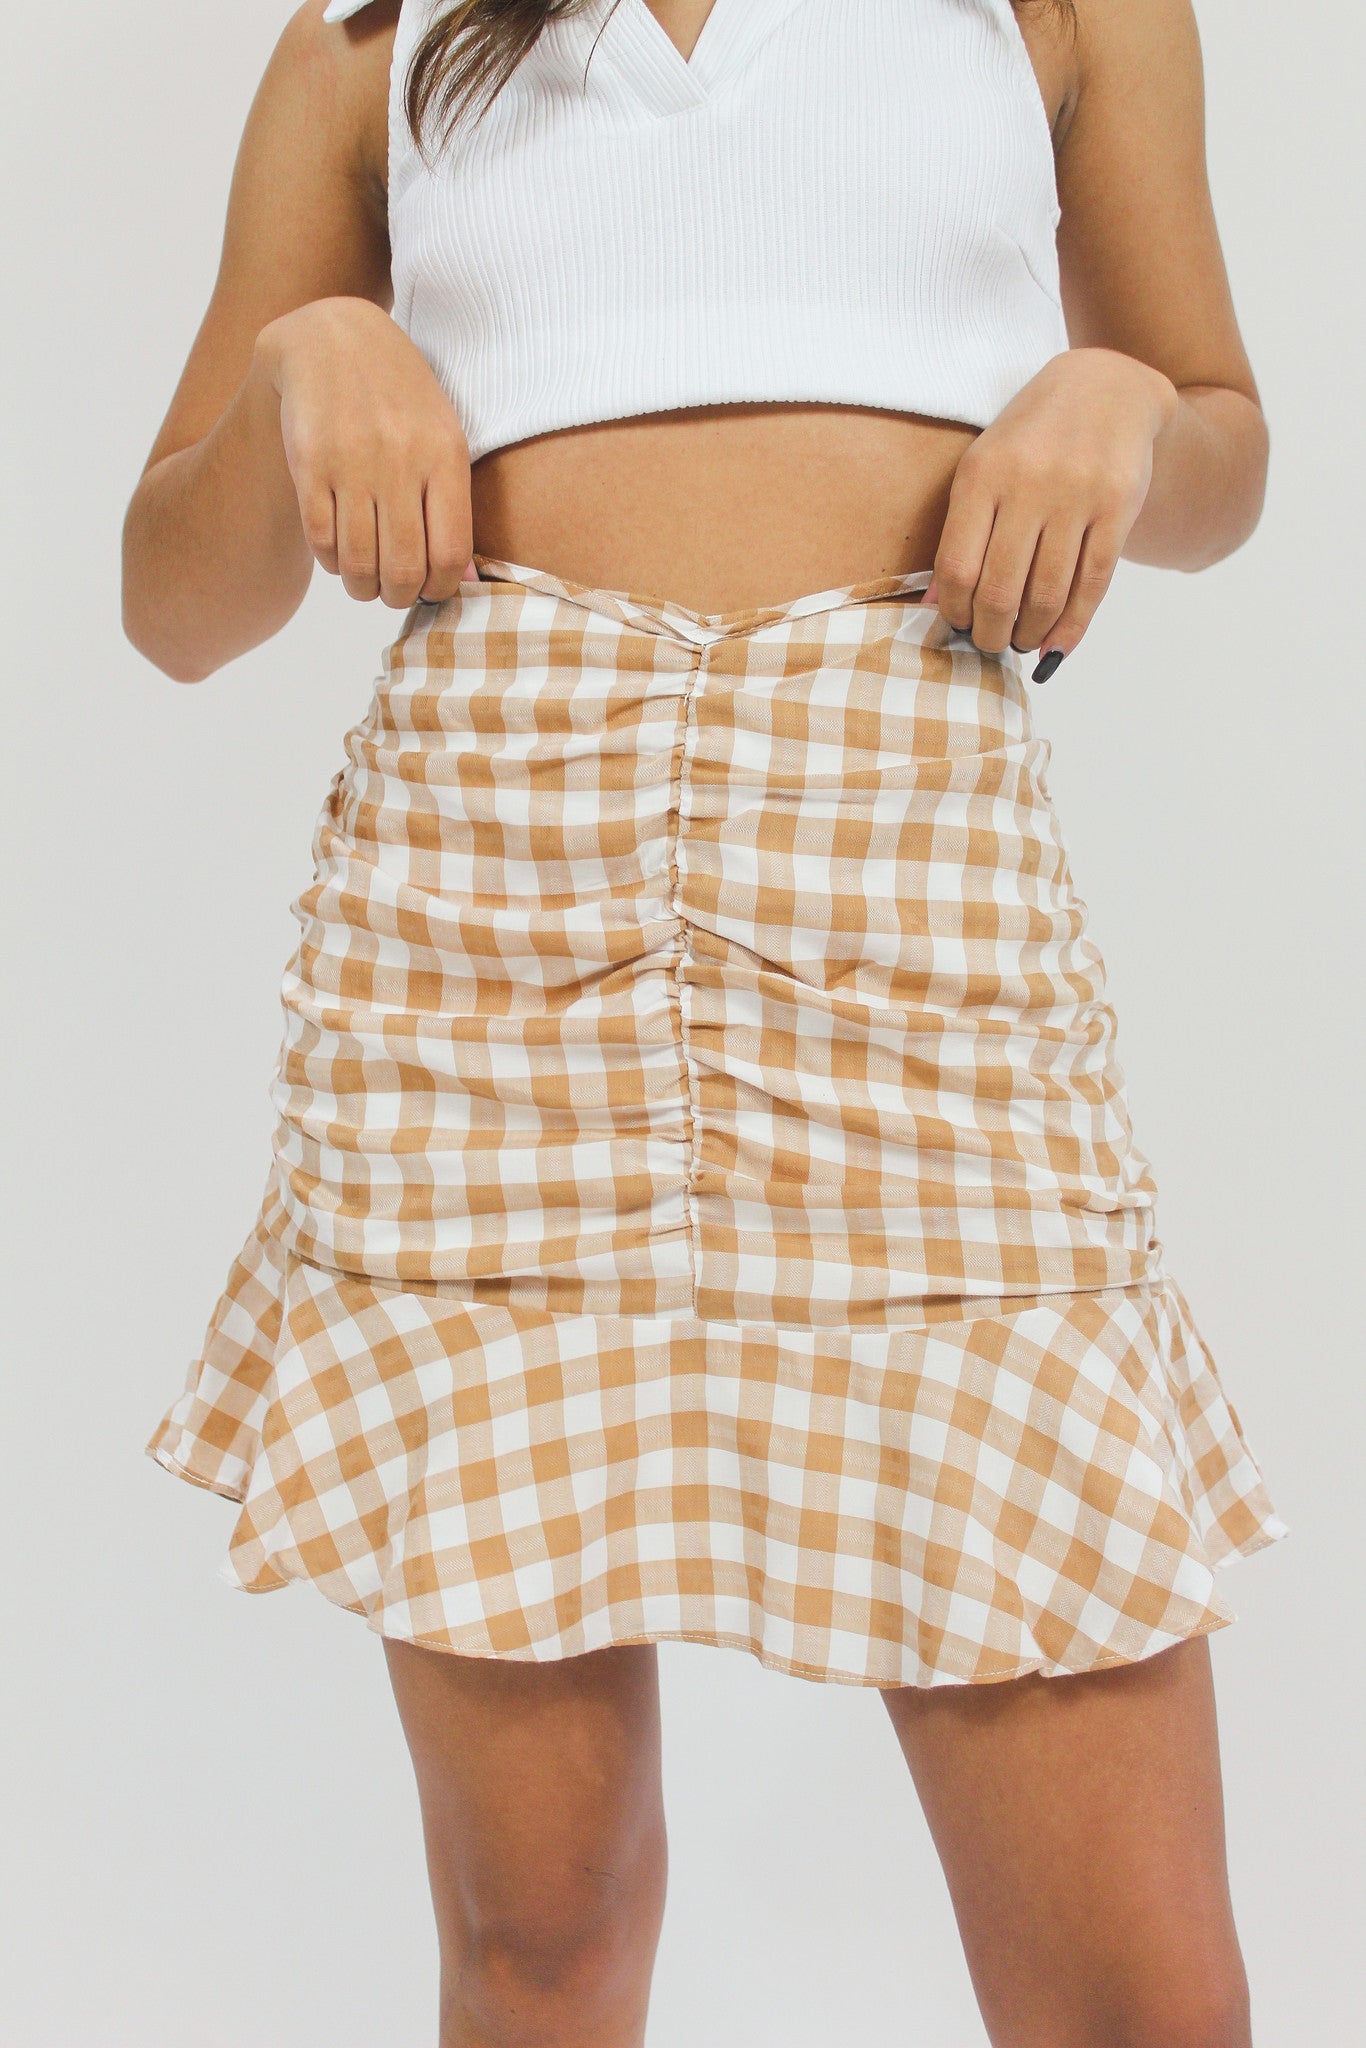 Pumpkin Spice Plaid Skirt